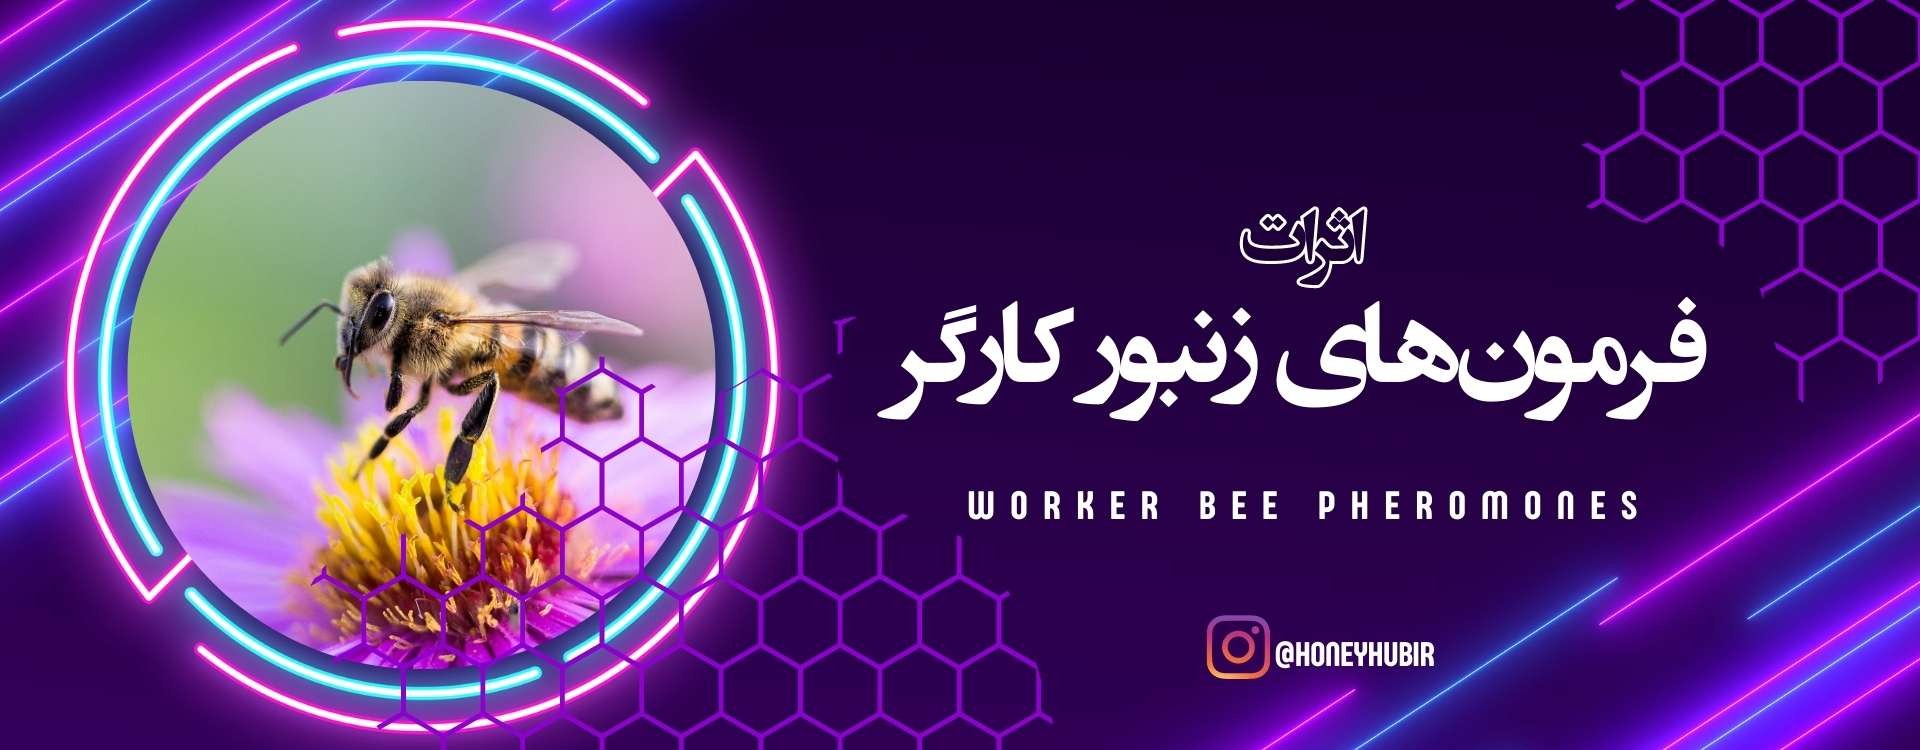 Worker bee pheromones: role and function